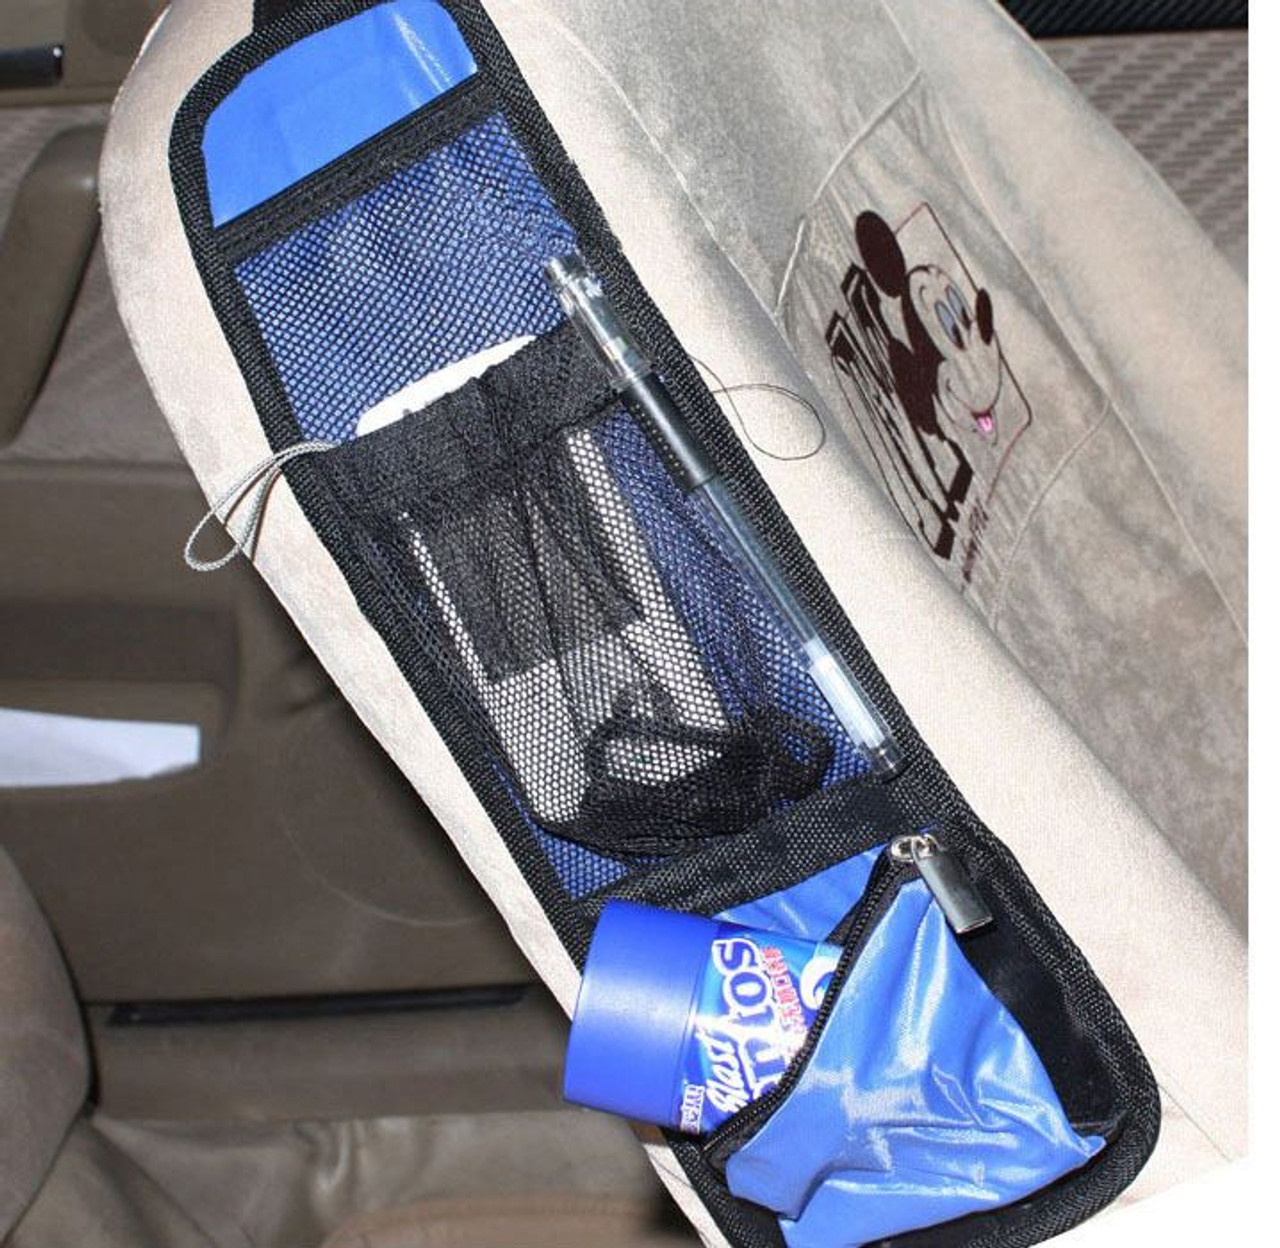 Vinsani Deluxe Multi Pocket Hanging Car Back Seat Pouch Storage Organiser -  Black - Vinsani Ltd.